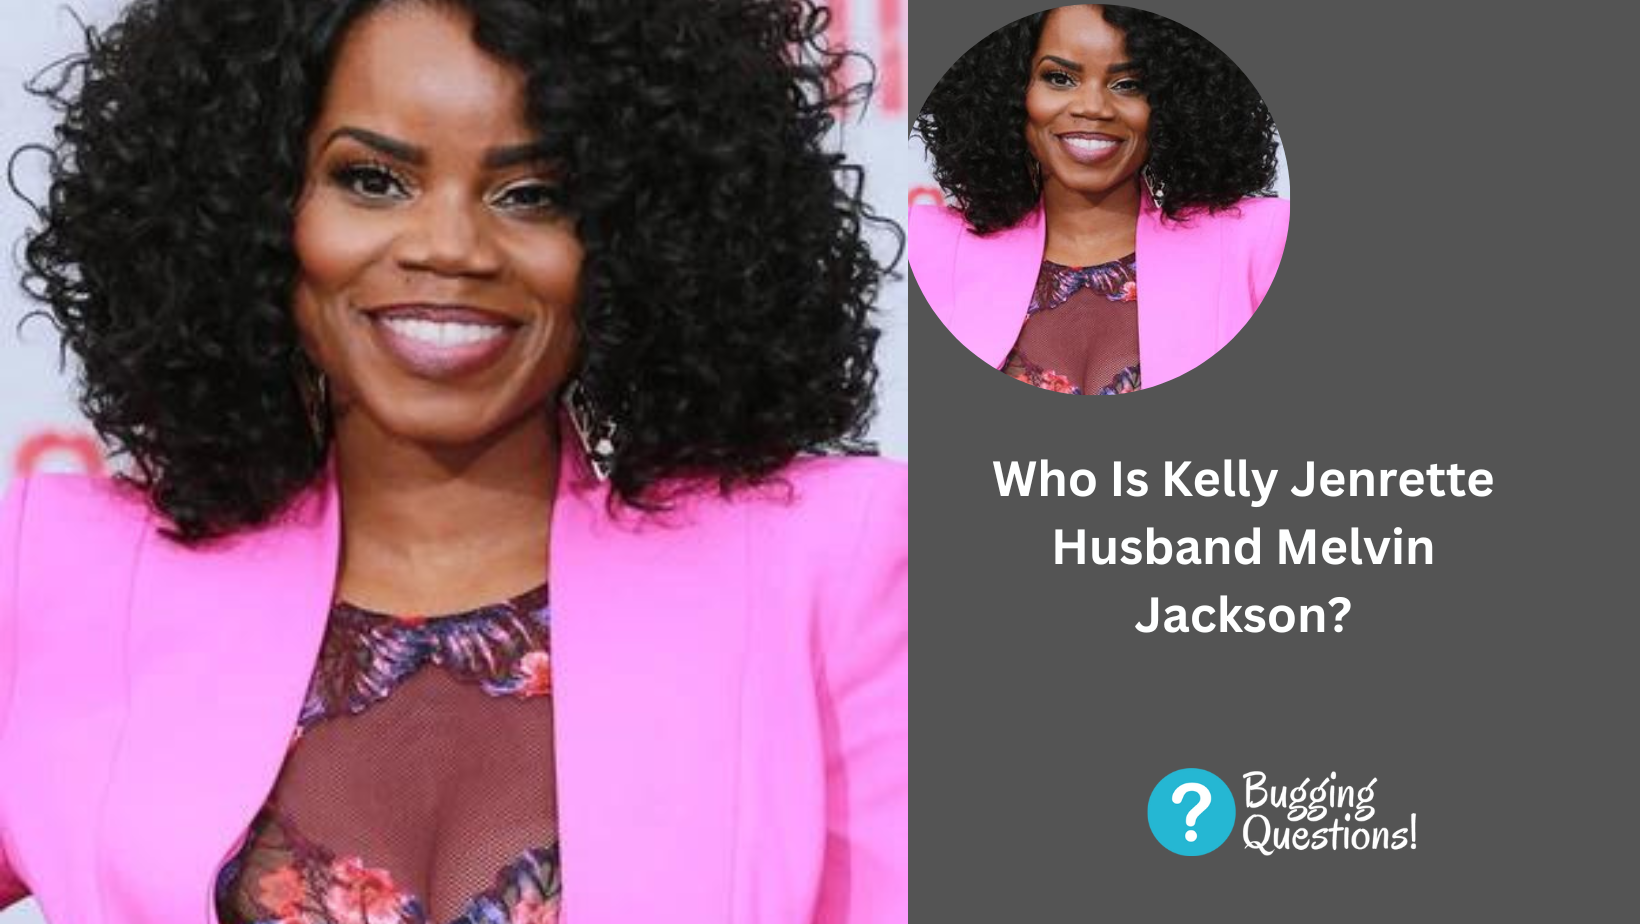 Who Is Kelly Jenrette Husband Melvin Jackson?